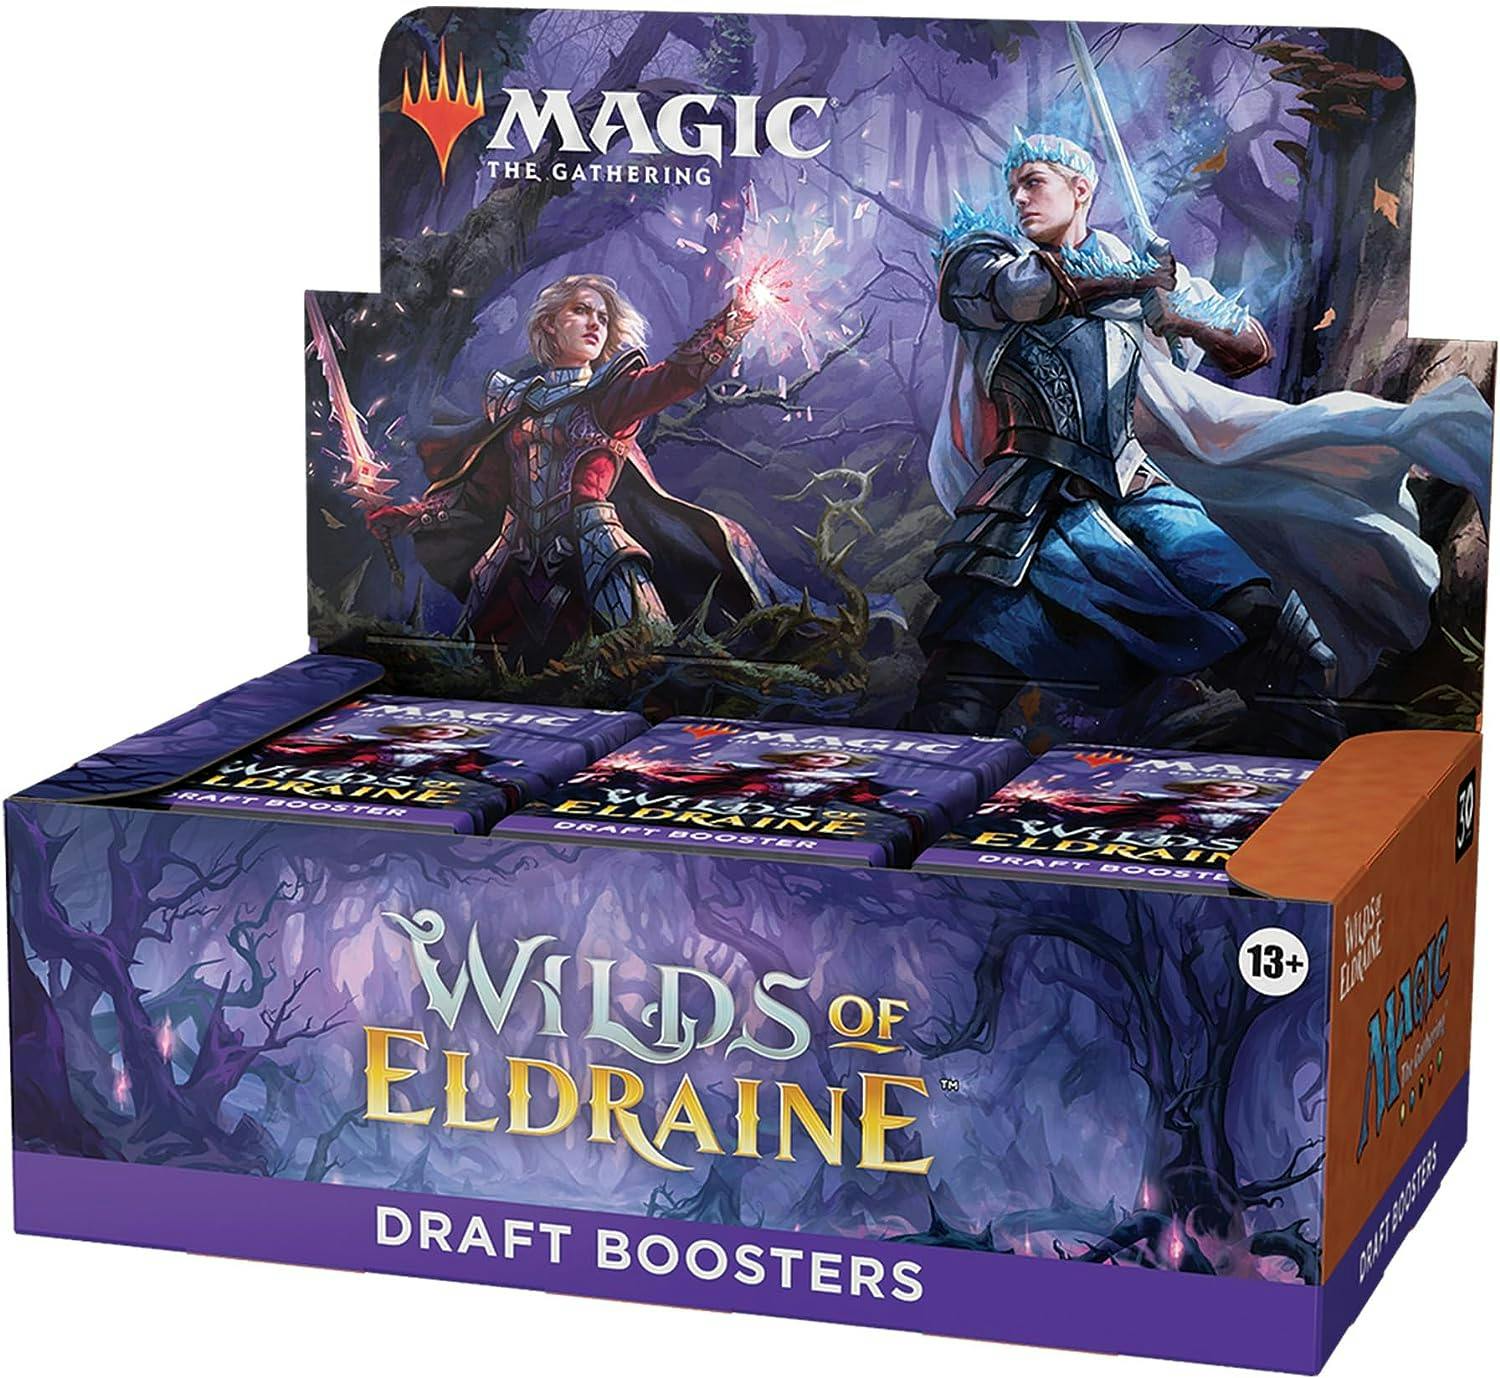 Magic the Gathering: Wilds of Eldraine - Draft